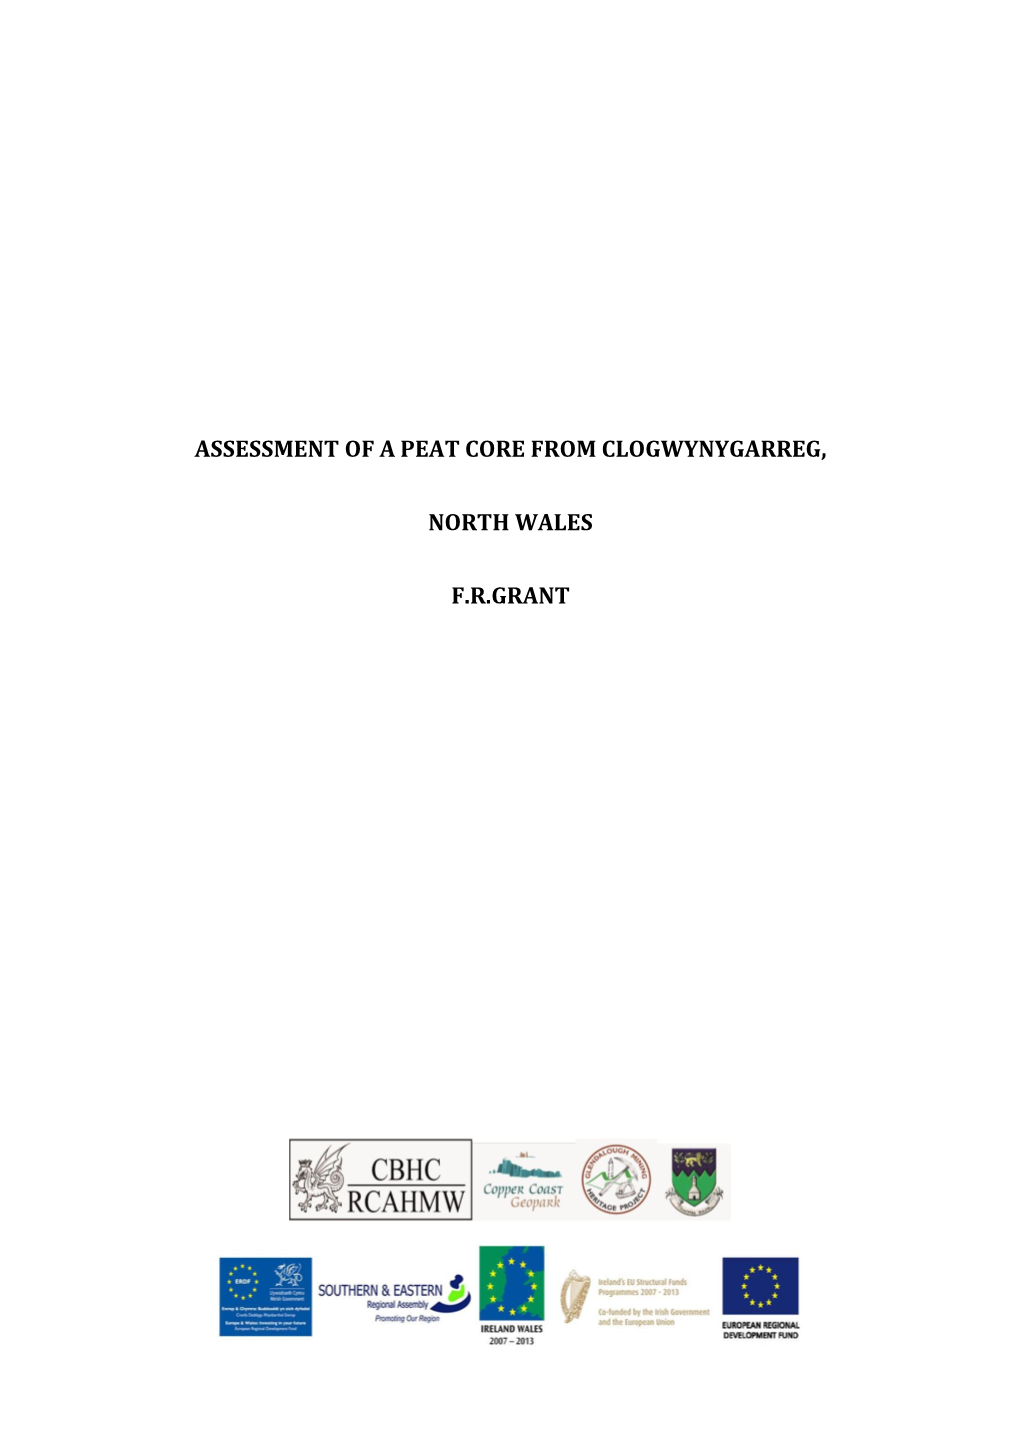 Assessment of a Peat Core from Clogwynygarreg